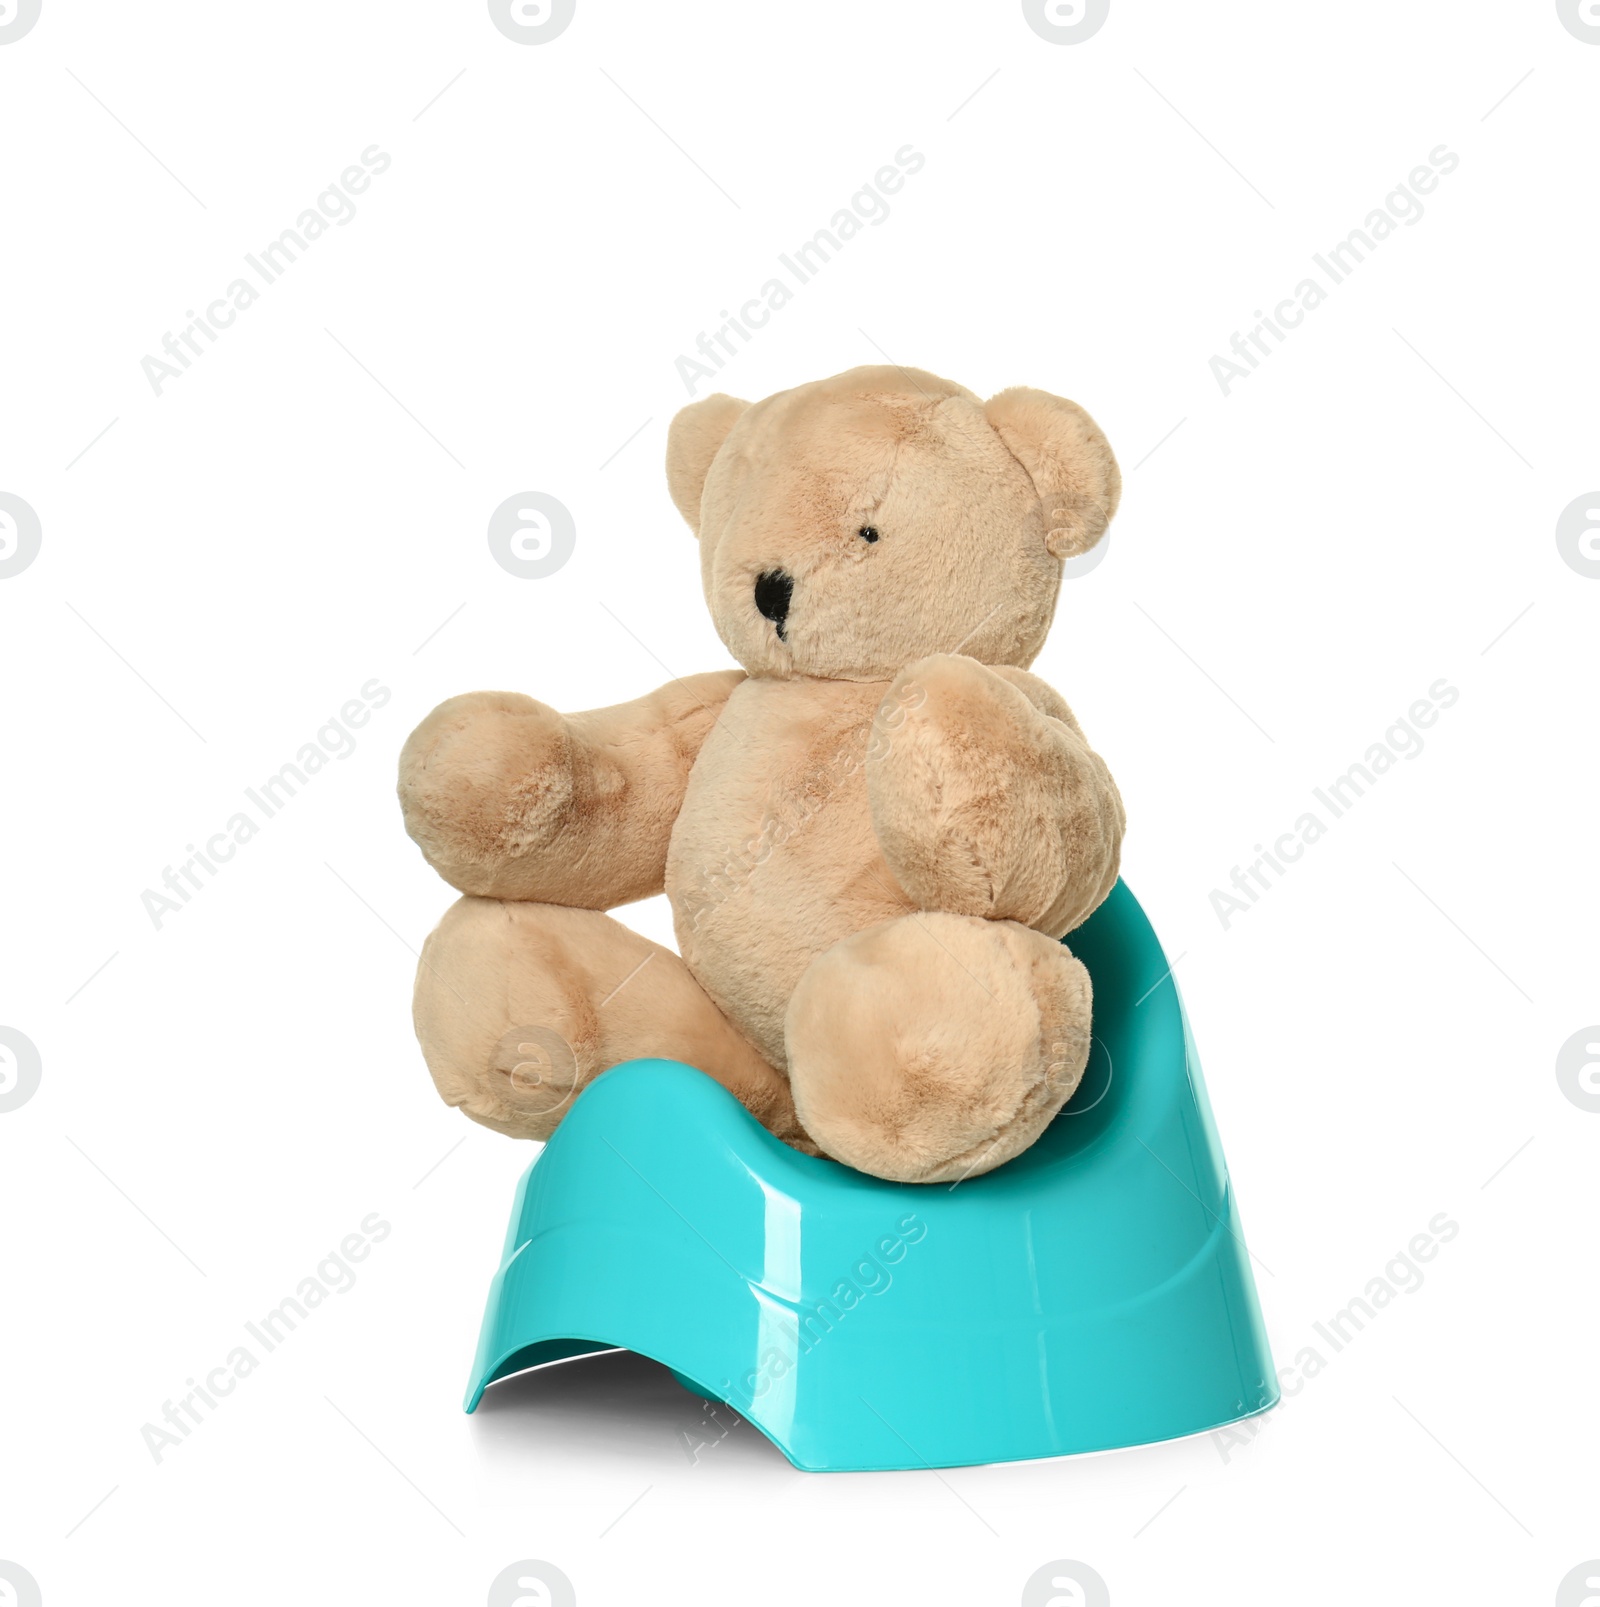 Photo of Teddy bear sitting on blue potty against white background. Toilet training